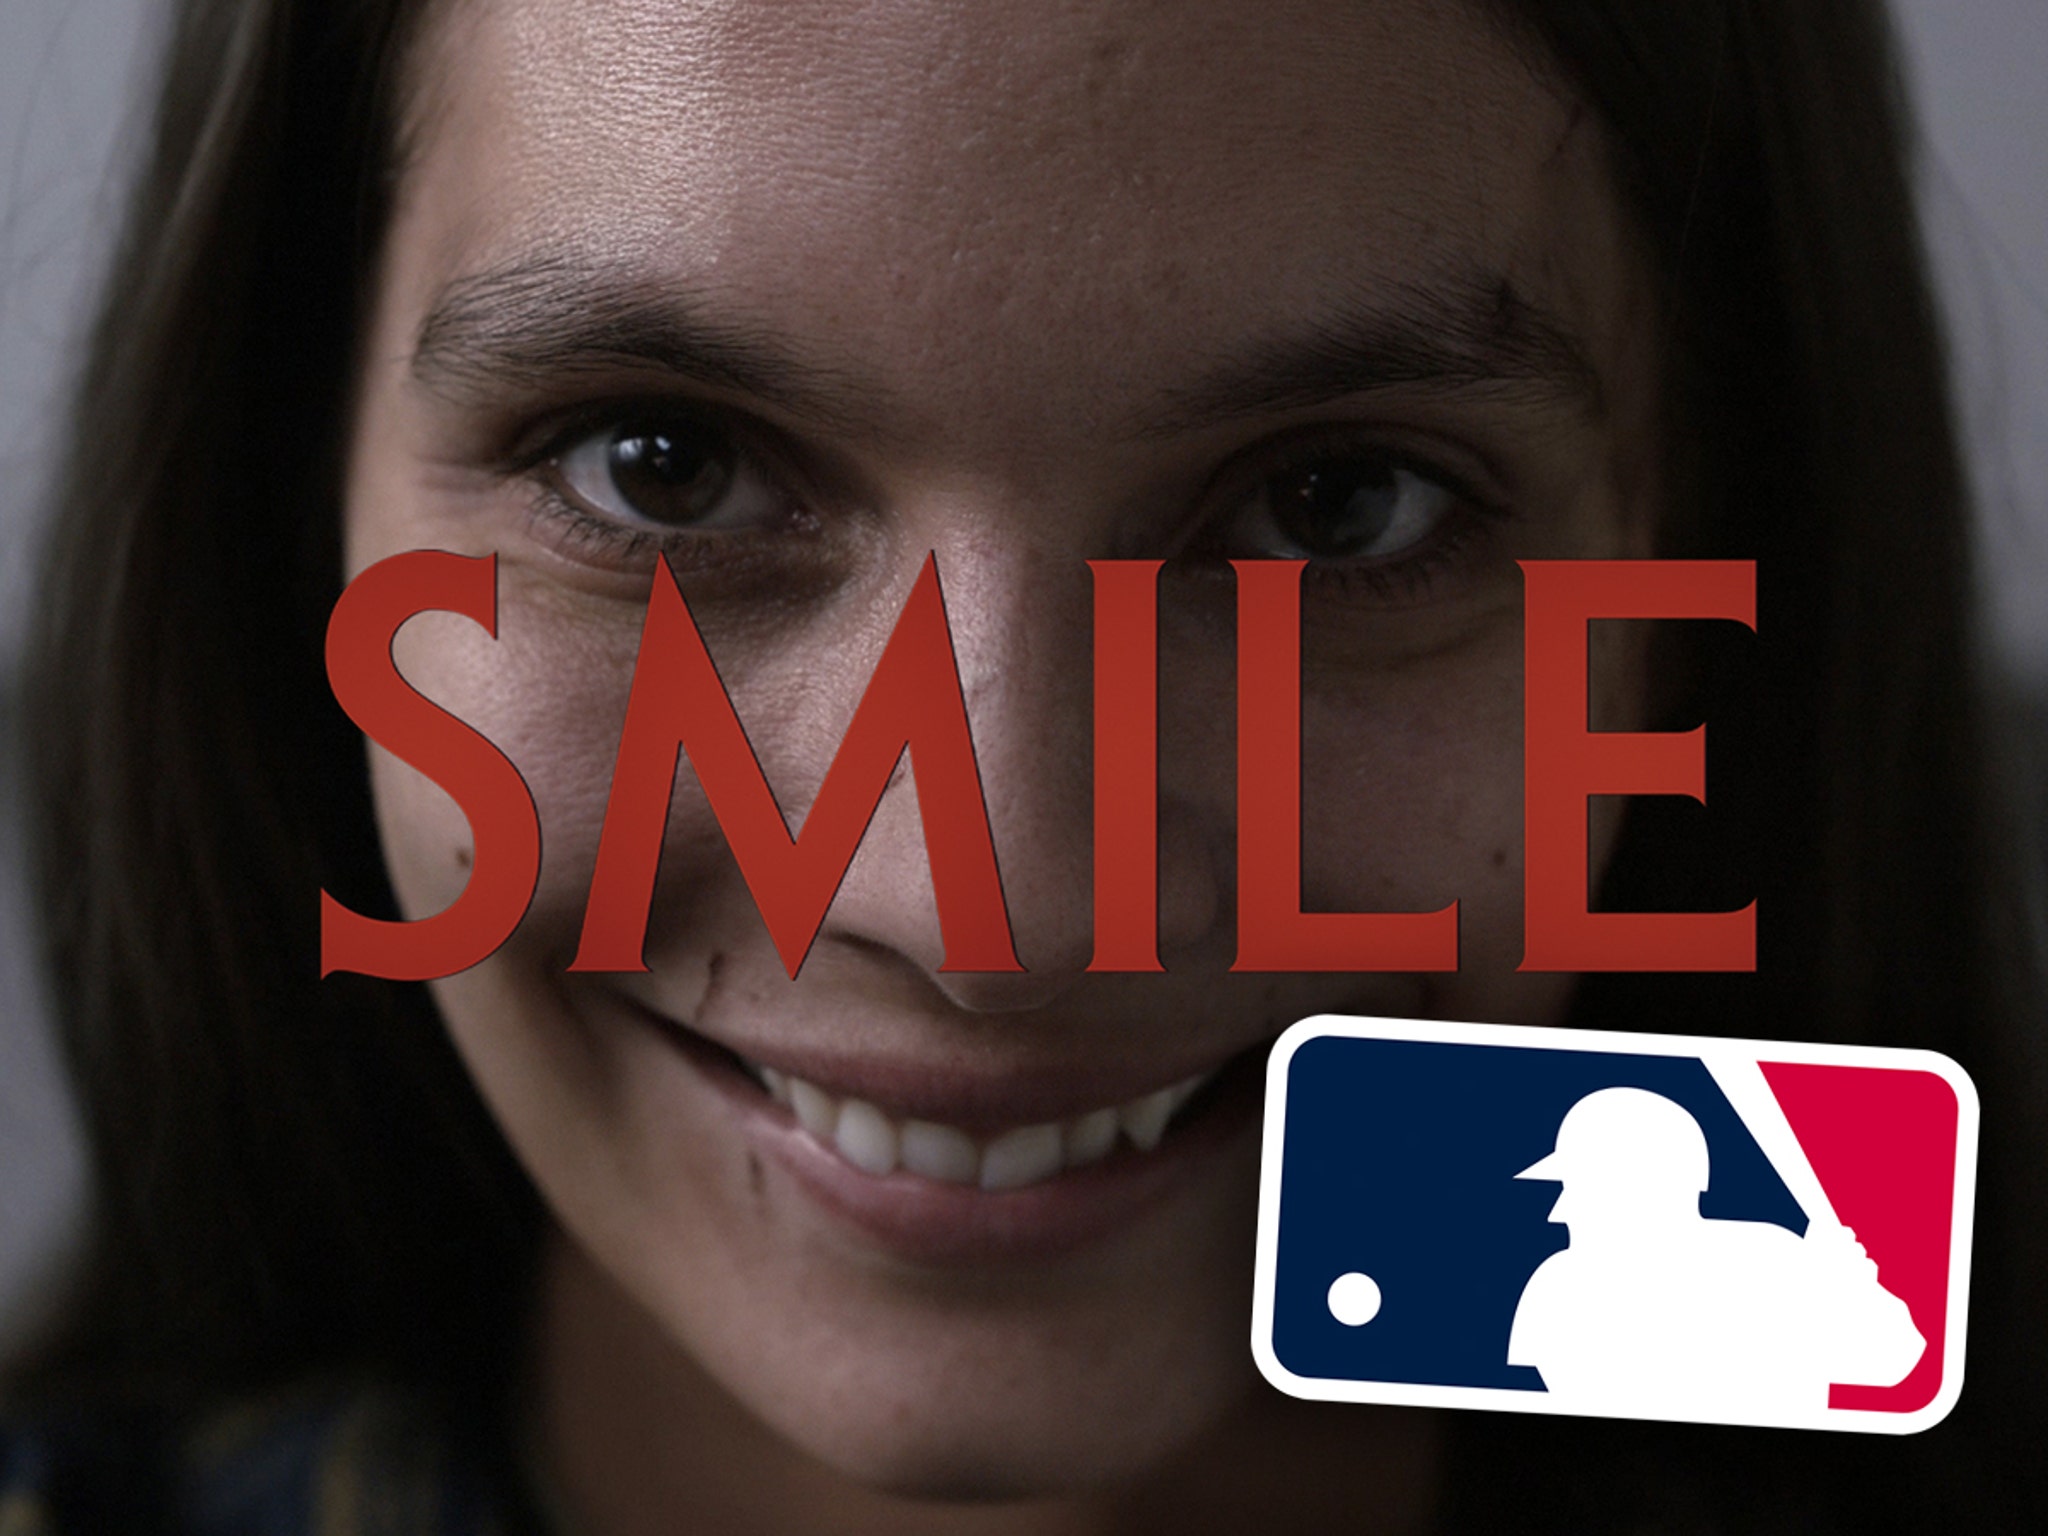 tmz.com - TMZ Staff - Smile' Actors Infiltrate MLB Games to Plug New Horror Movie